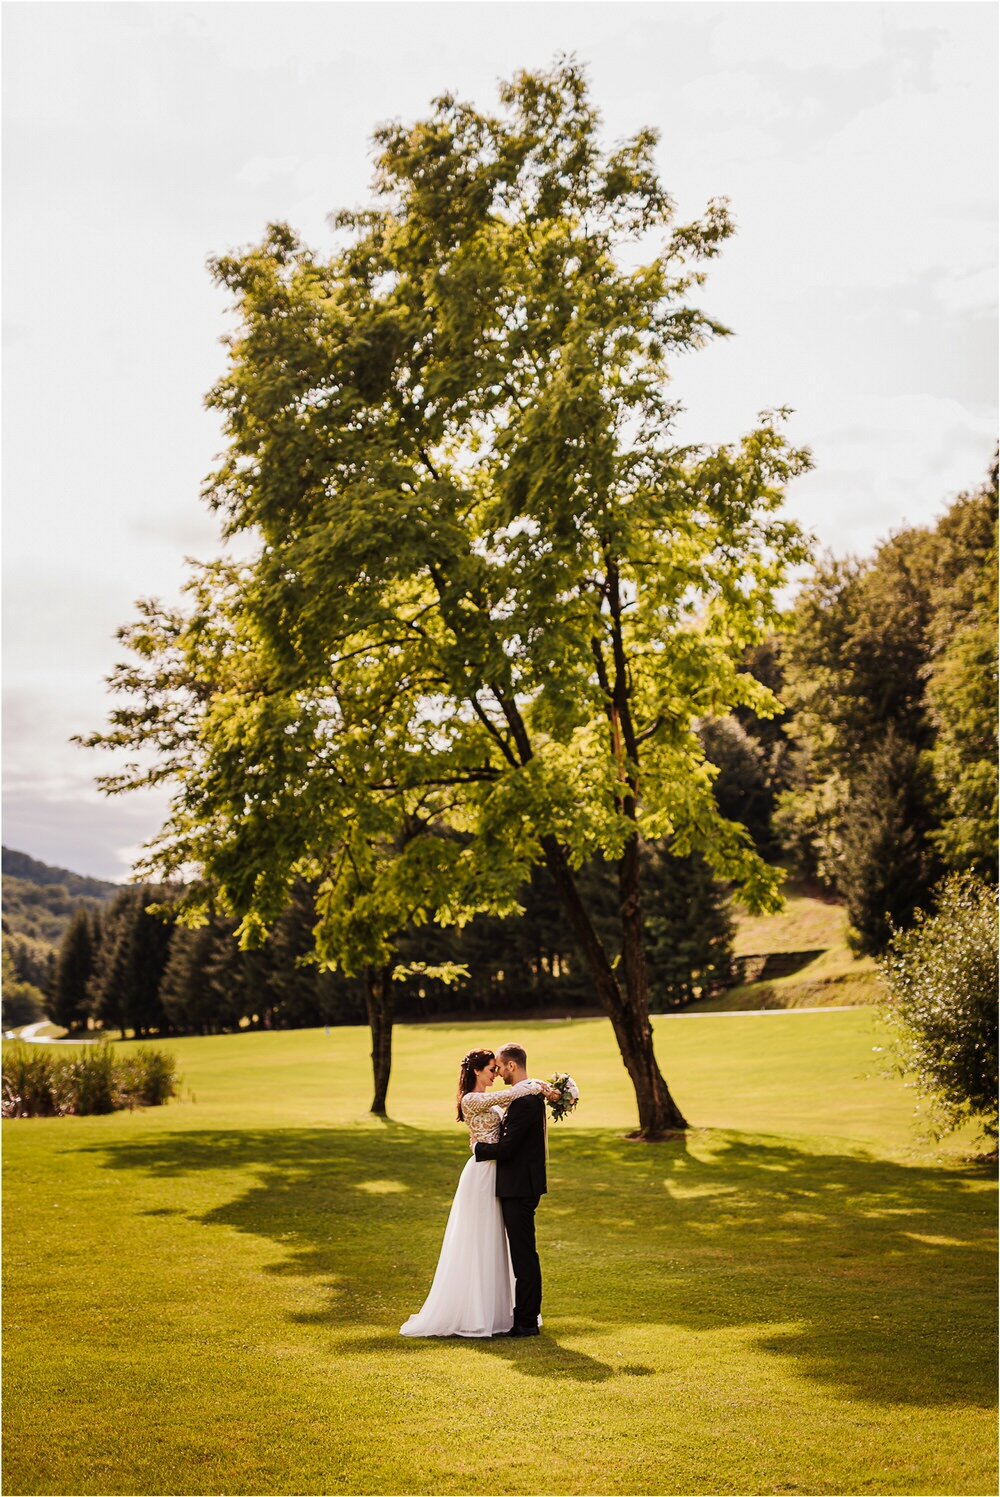 best of wedding photography 2019 photographer italy ireland tuscany santorini greece spain barcelona lake como chateux scotland destination wedding 0037.jpg